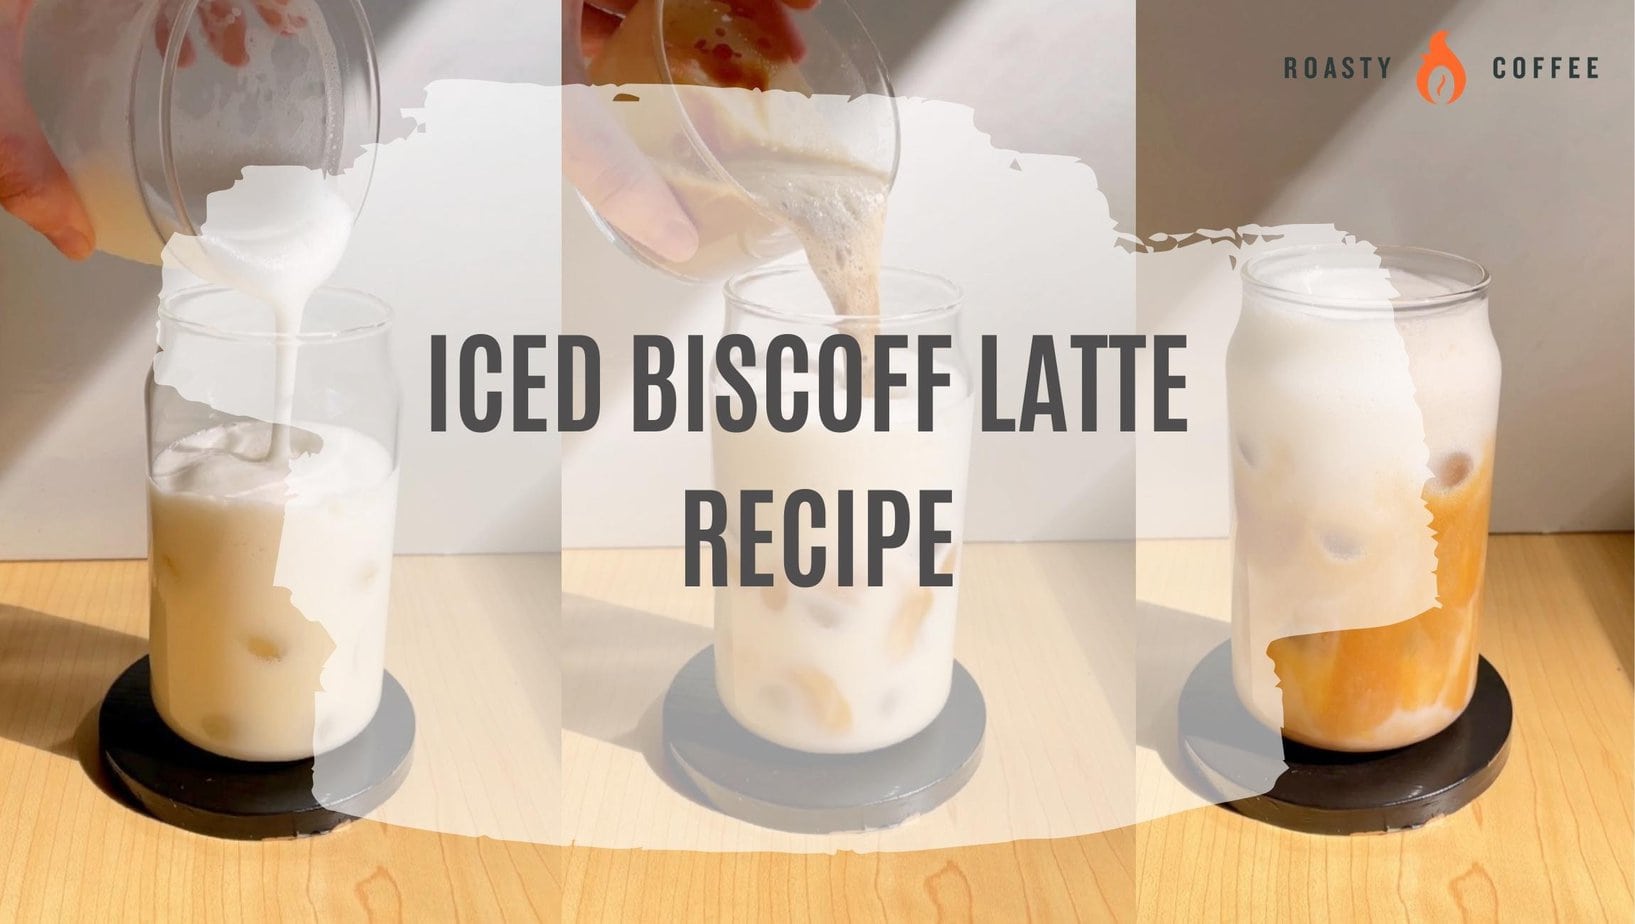 iced biscoff latte recipe